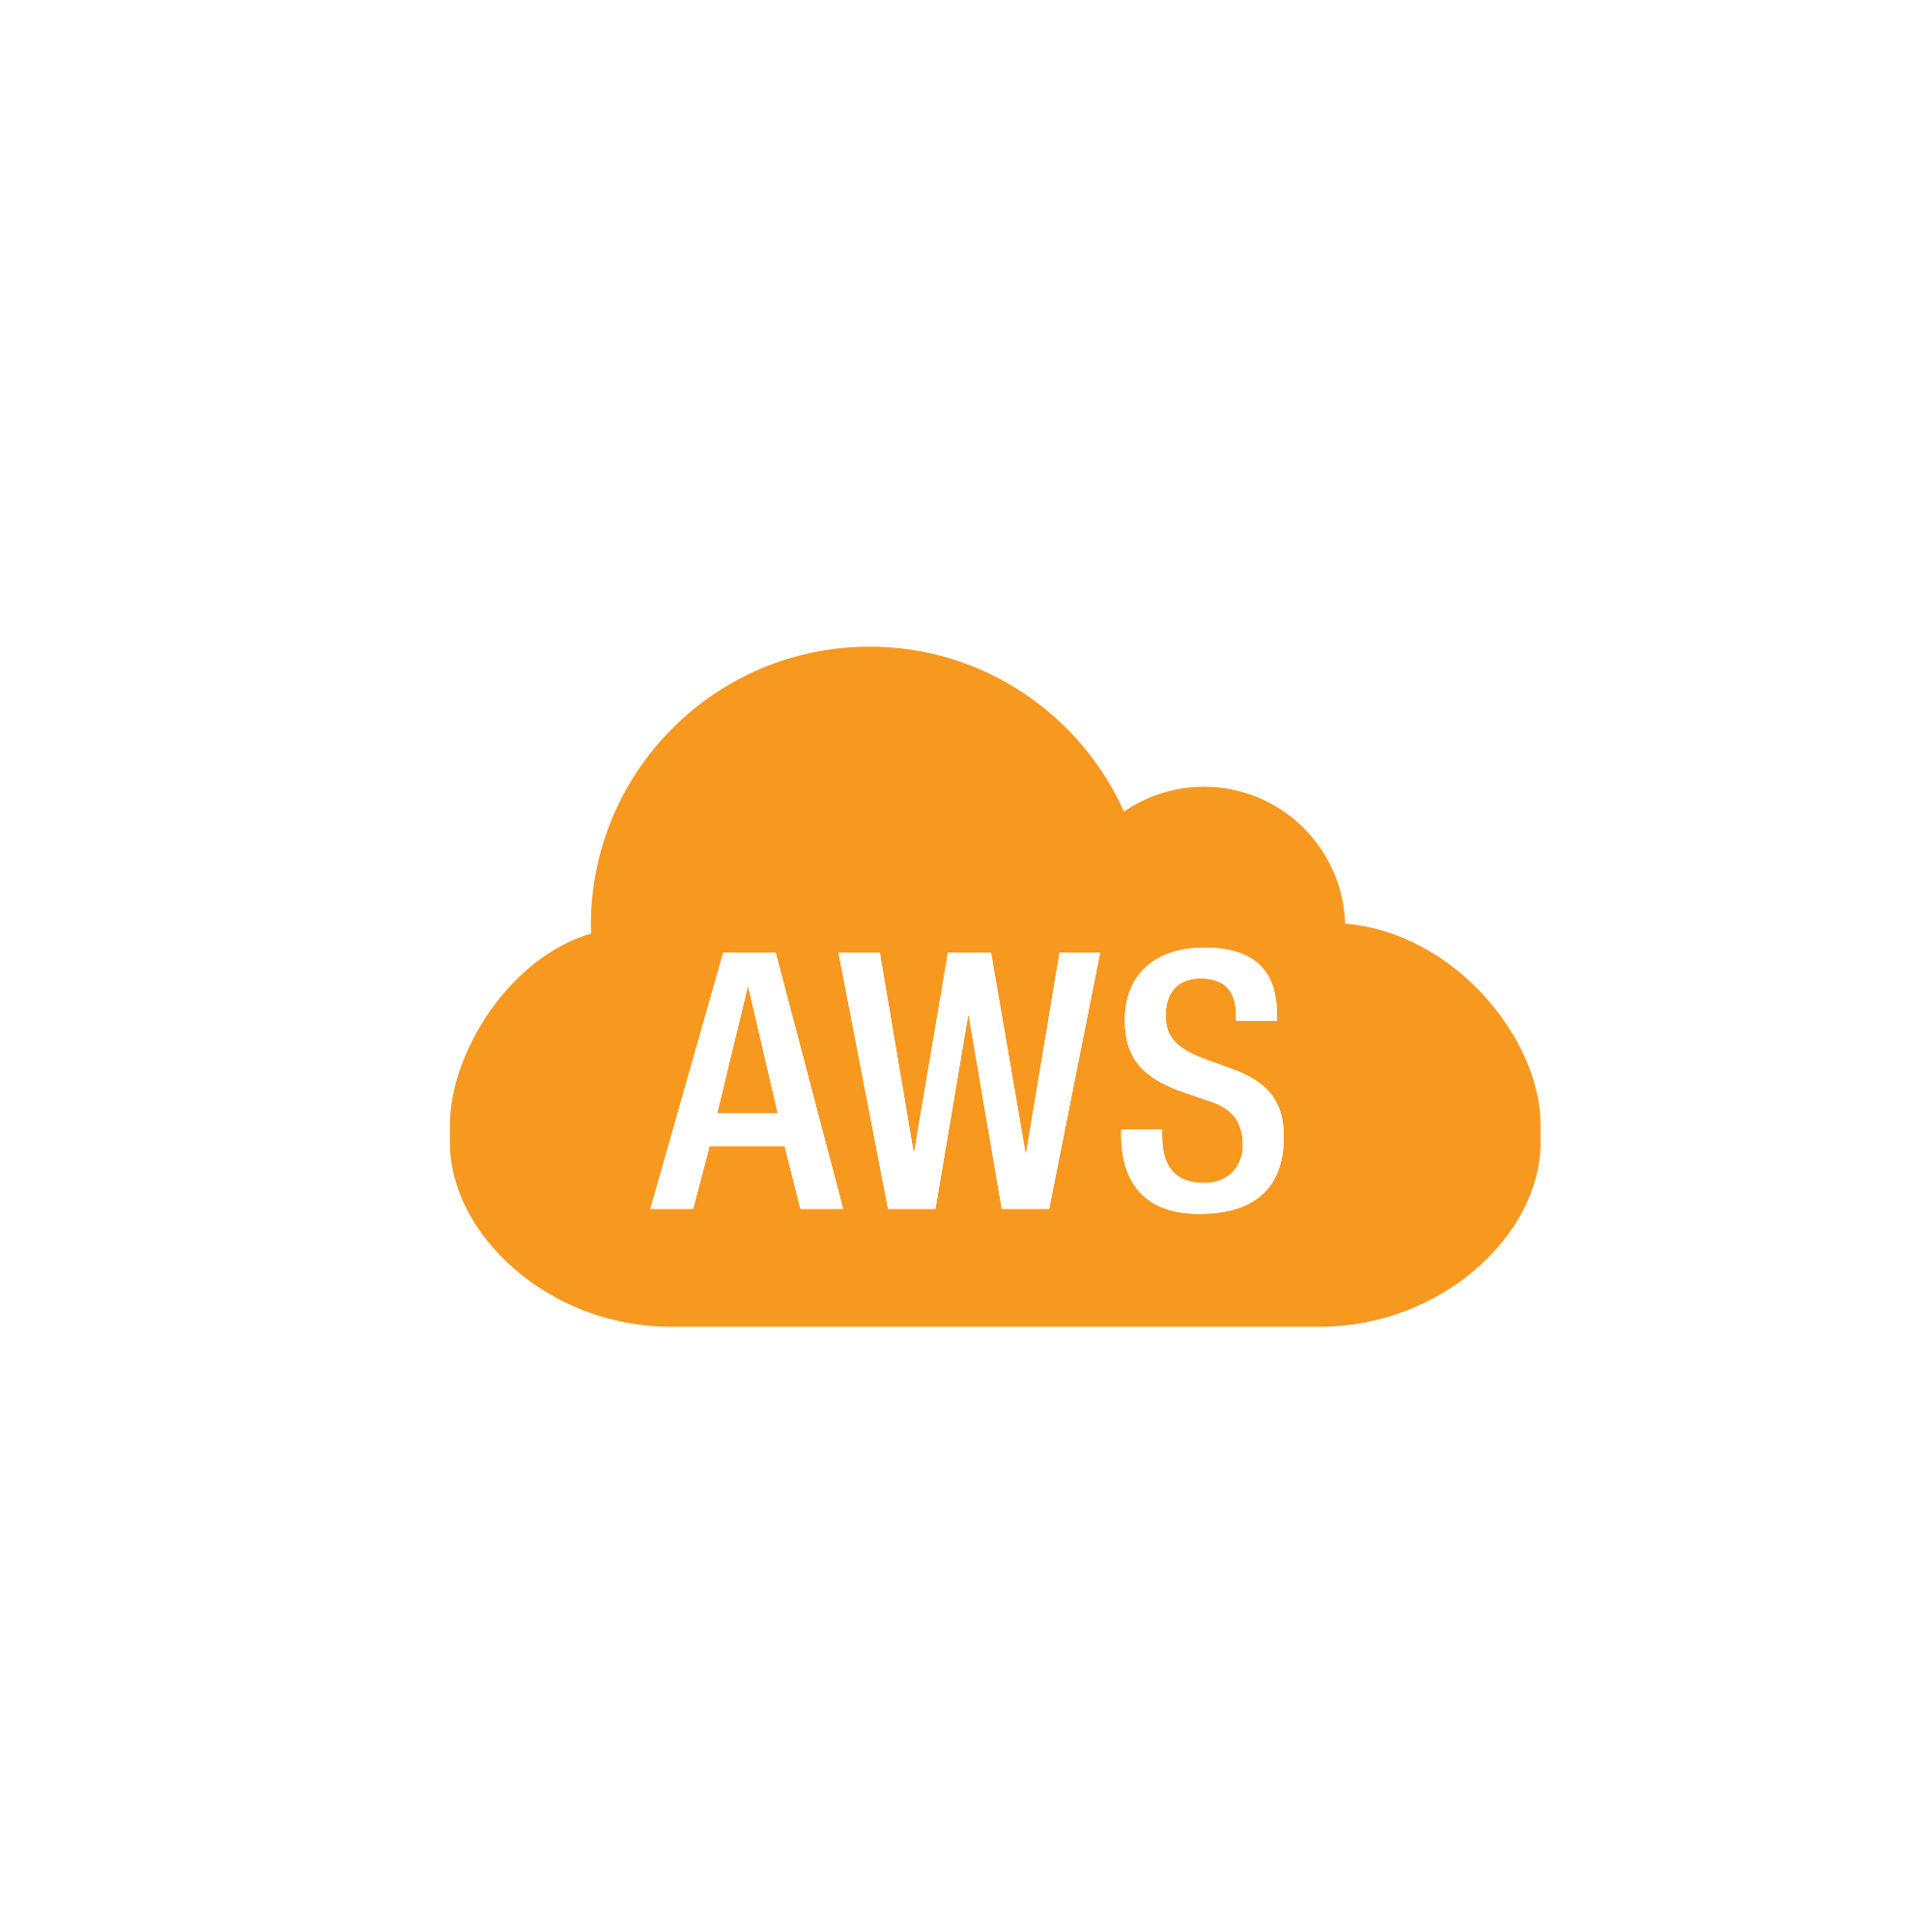 Amazon Web Services AWS Logo Background PNG Image